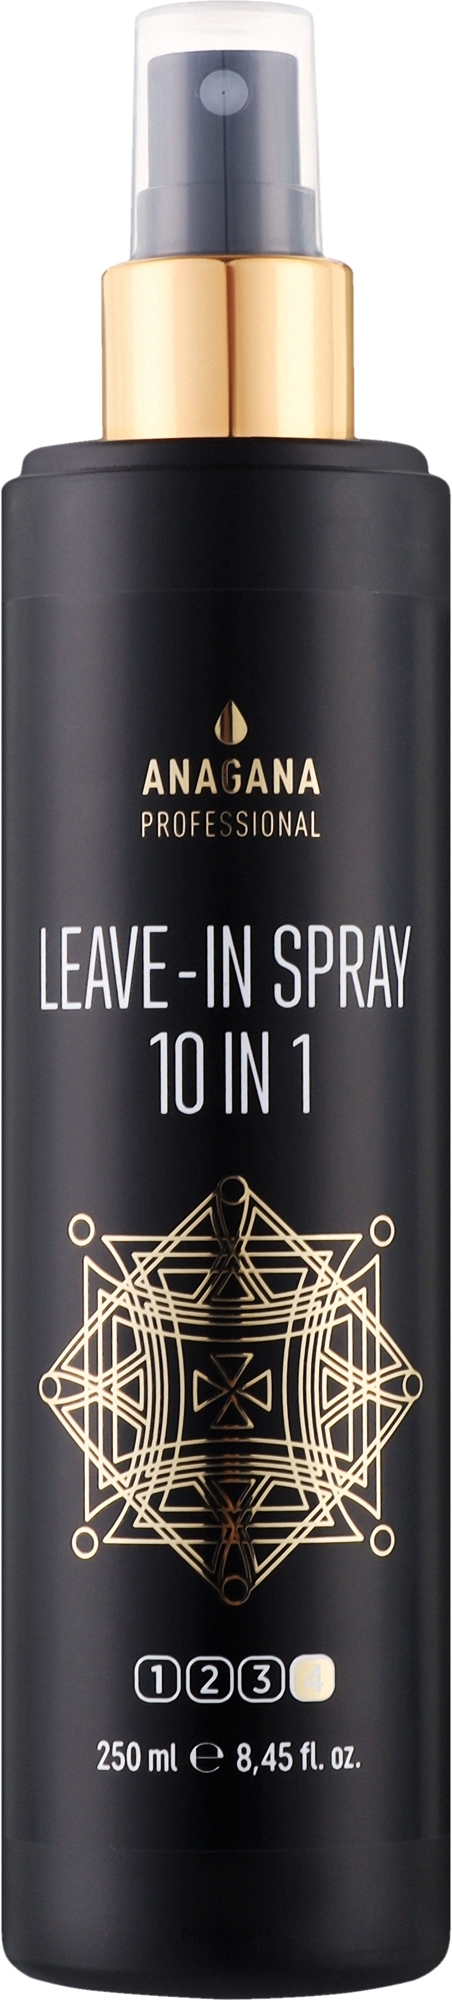 Несмываемый спрей "10 в 1" для всех типов волос - Anagana Professional Leave-In Spray 10 In 1 — фото 250ml